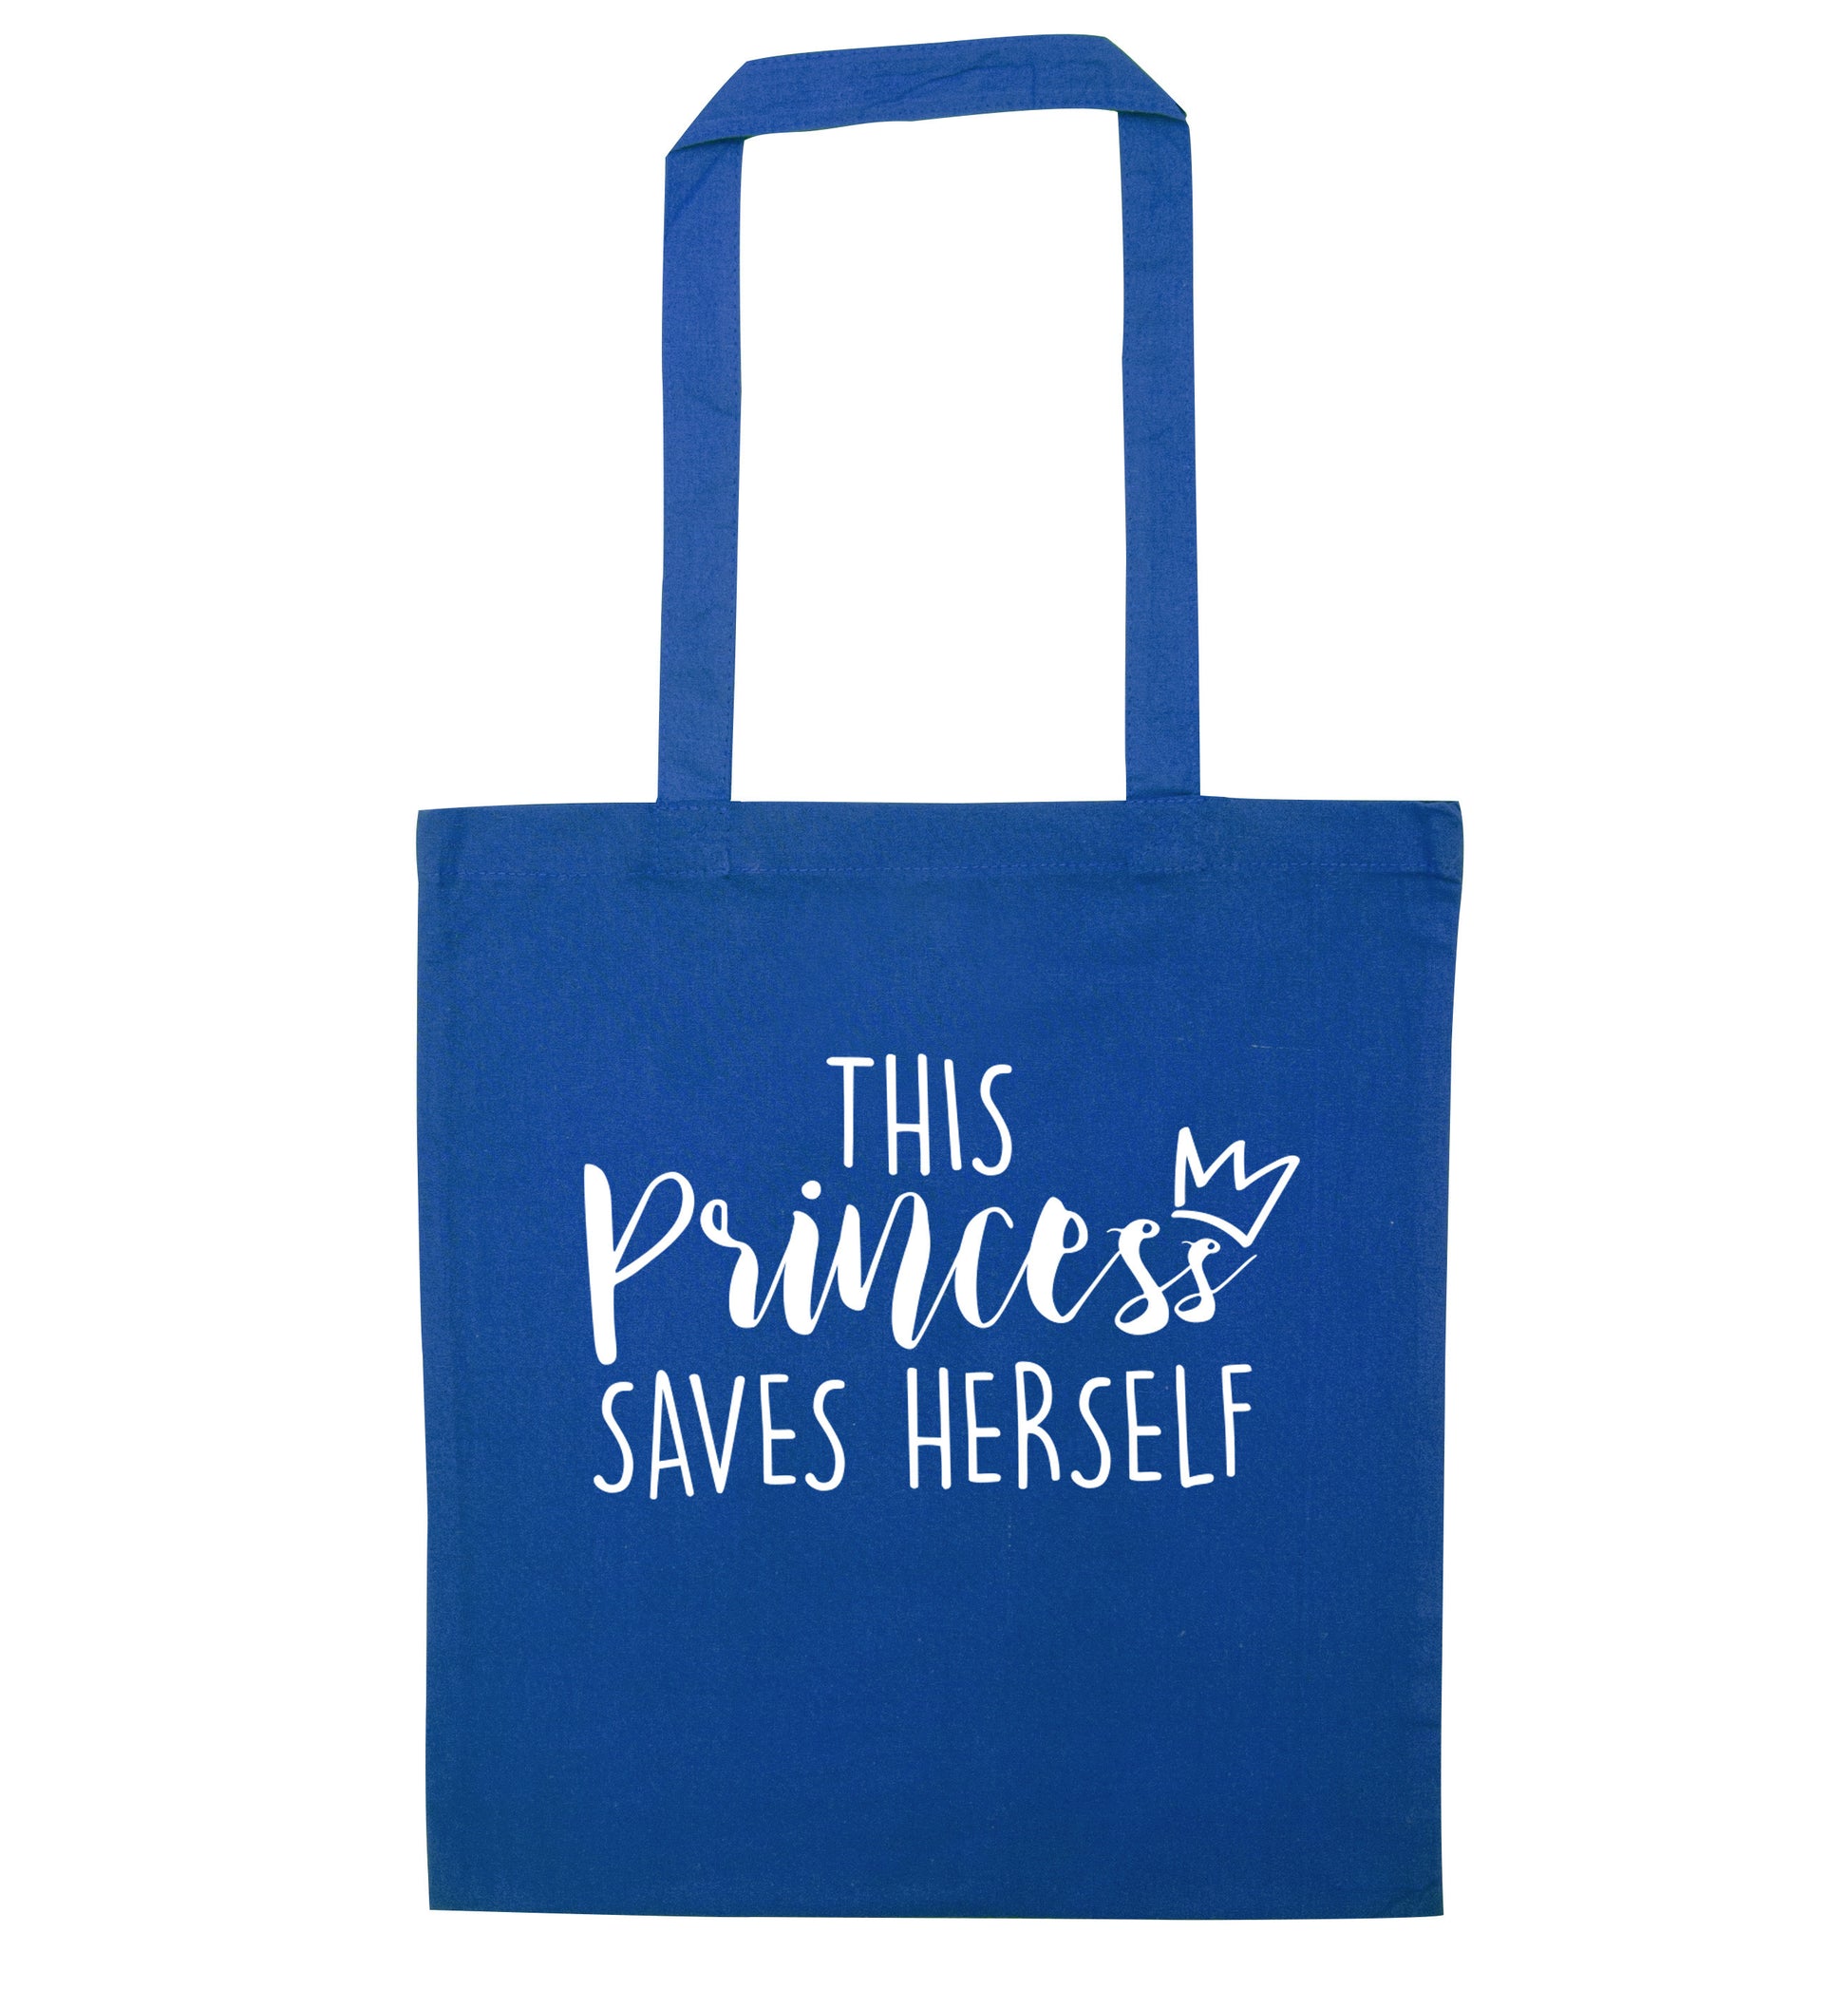 This princess saves herself blue tote bag